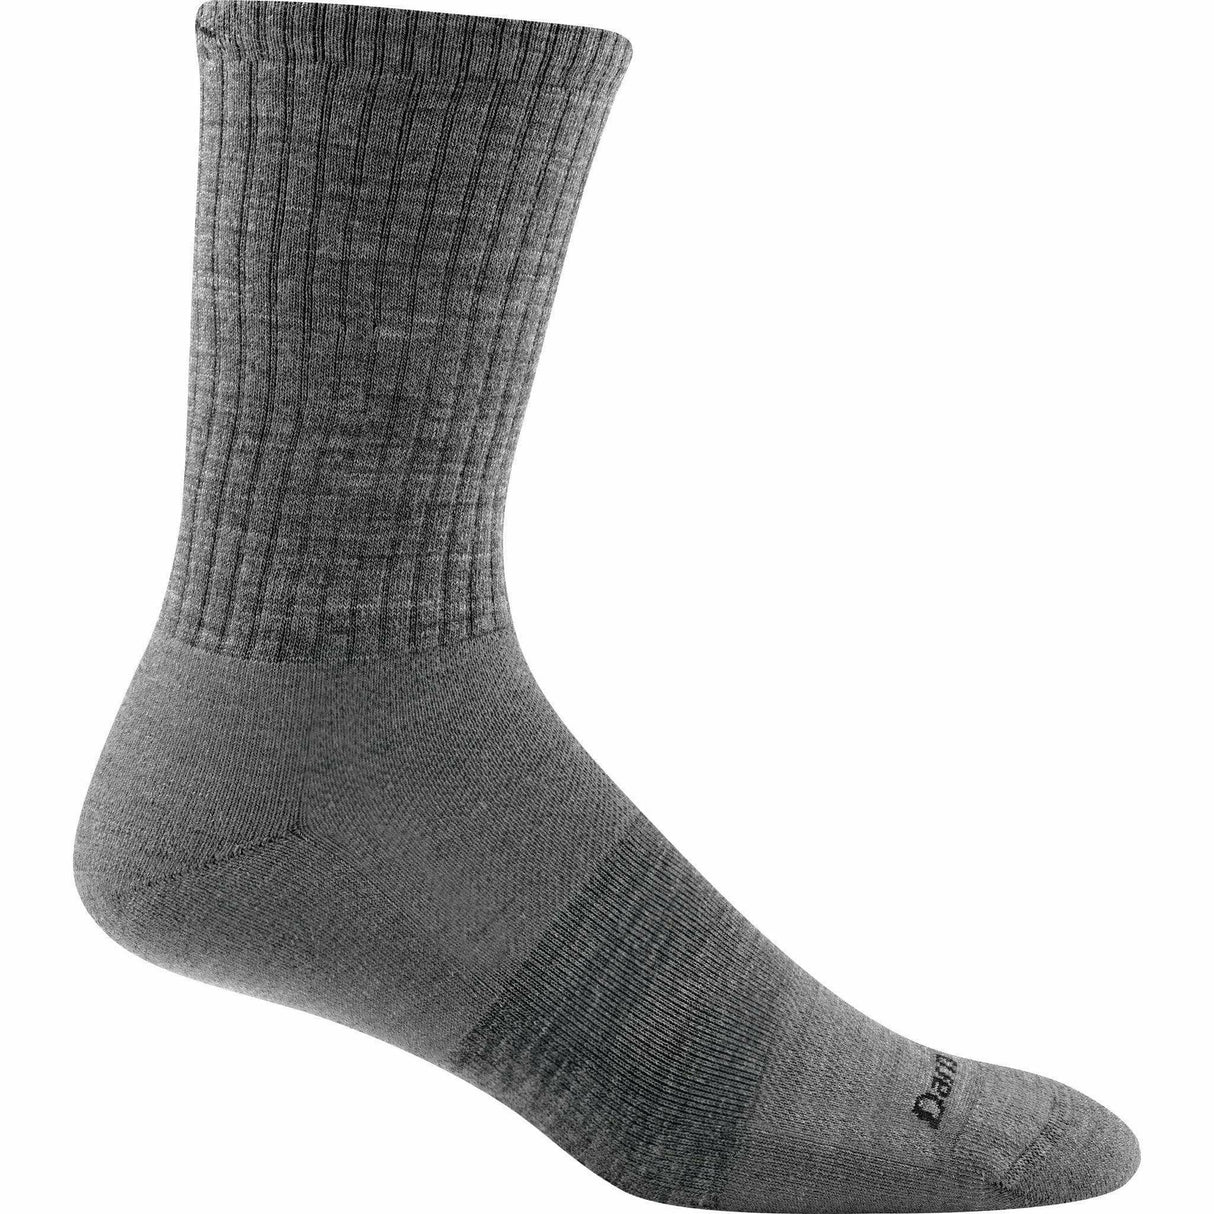 Darn Tough Mens The Standard Crew No Cushion Lightweight Lifestyle Socks  -  Medium / Medium Gray